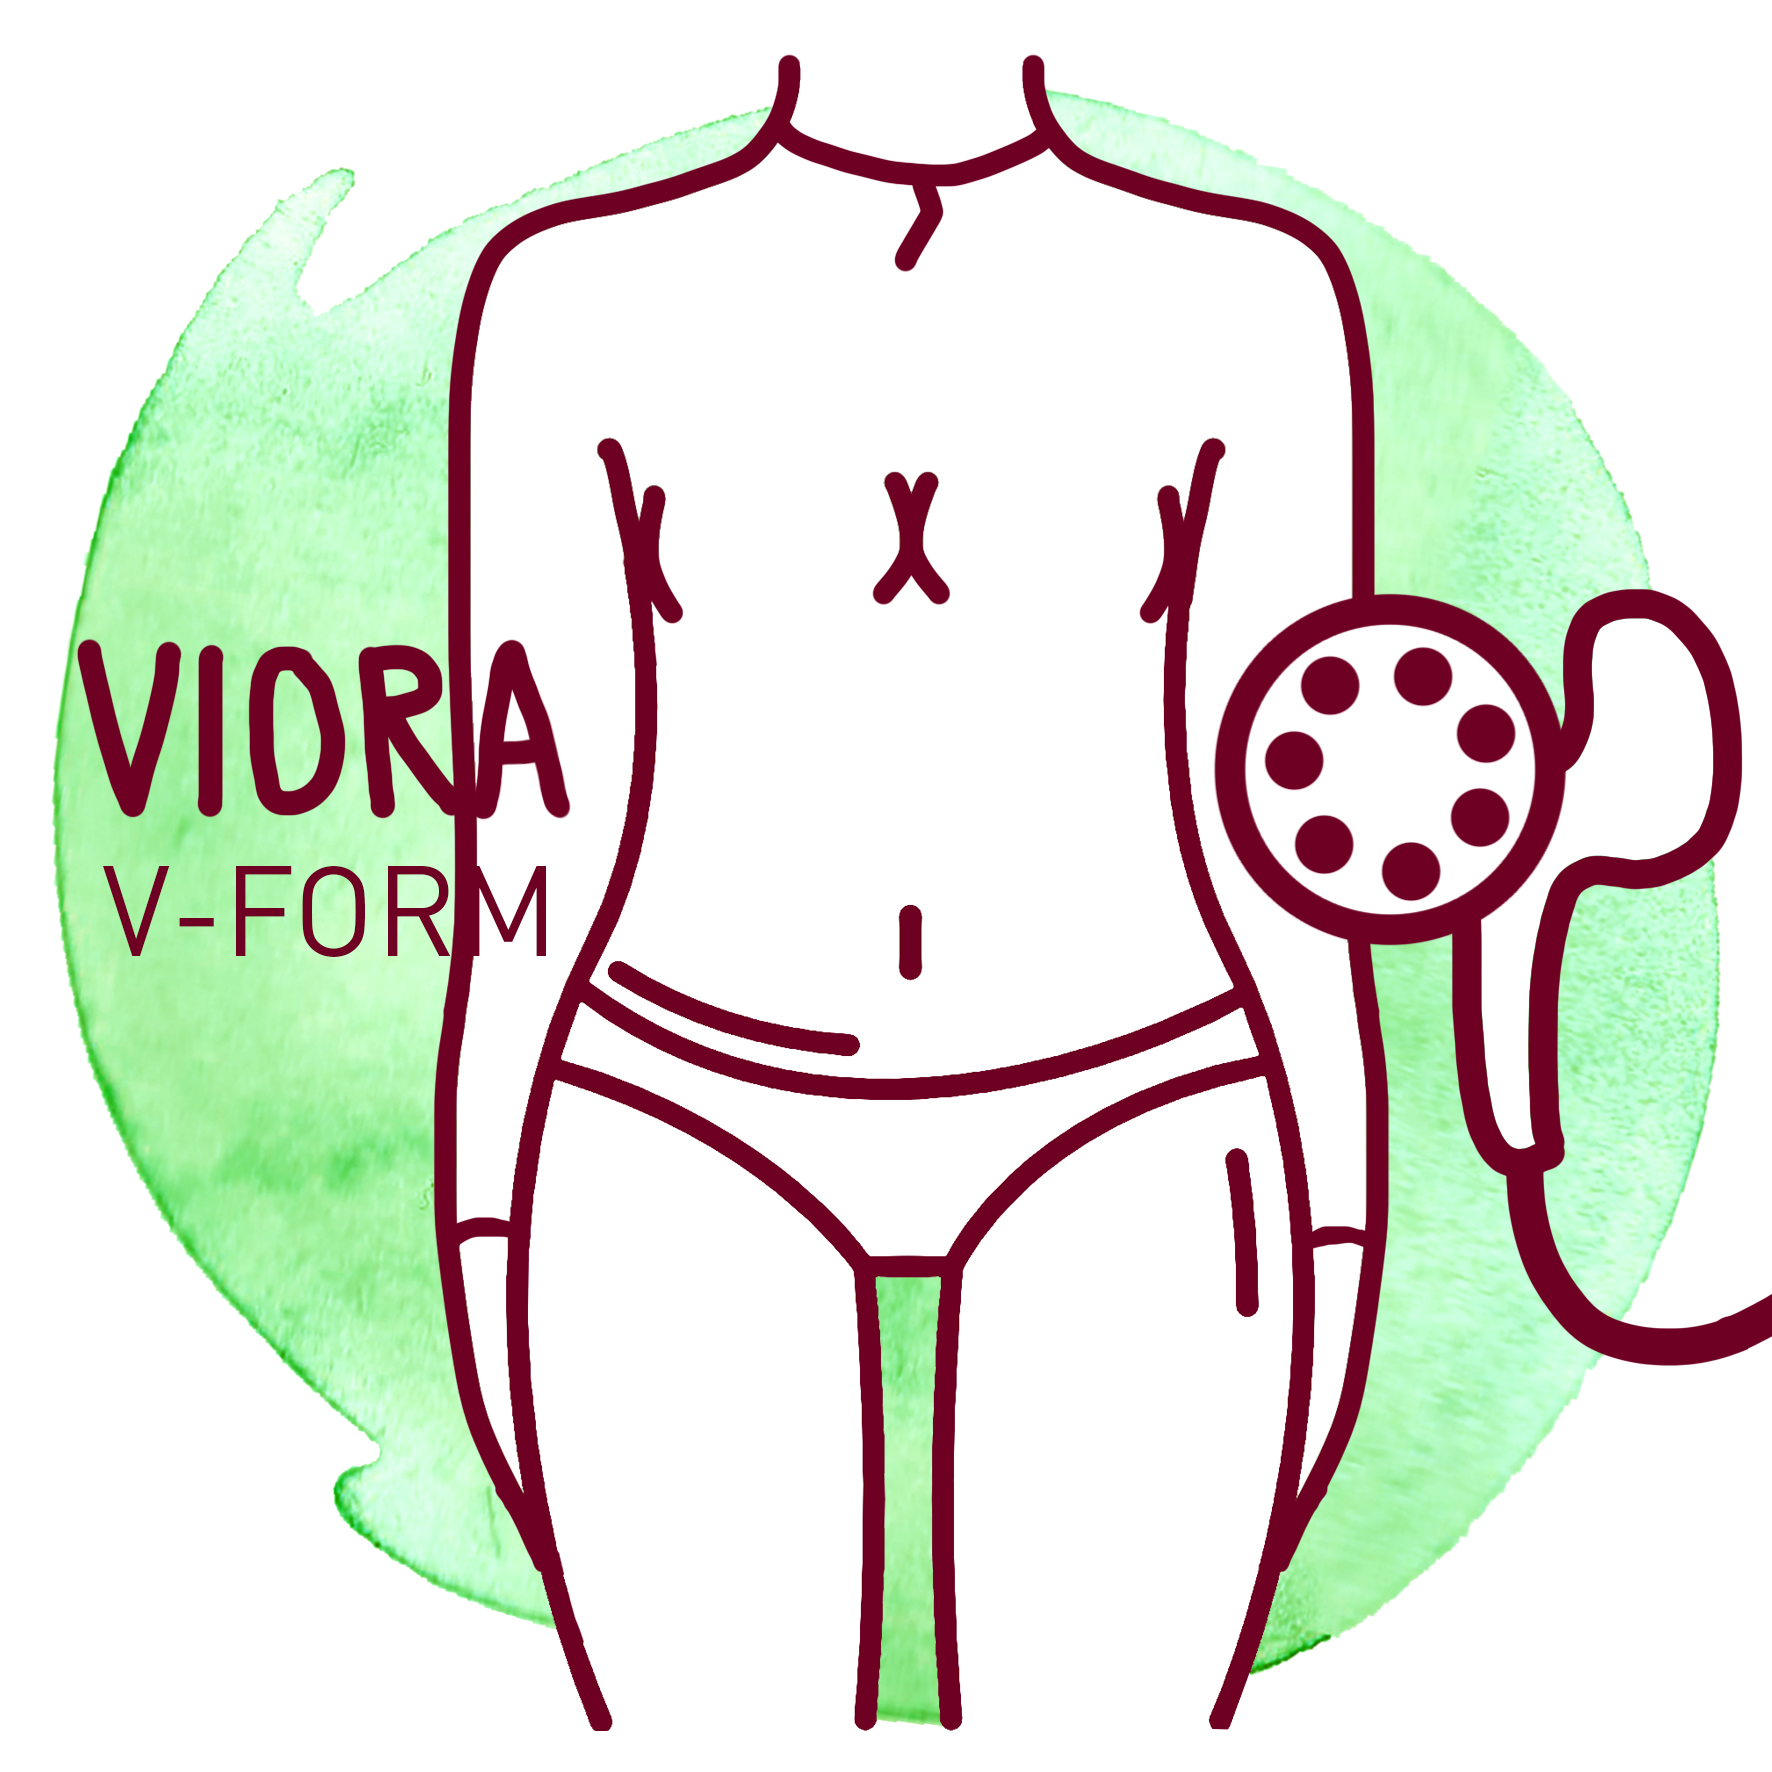 Viora V-Form